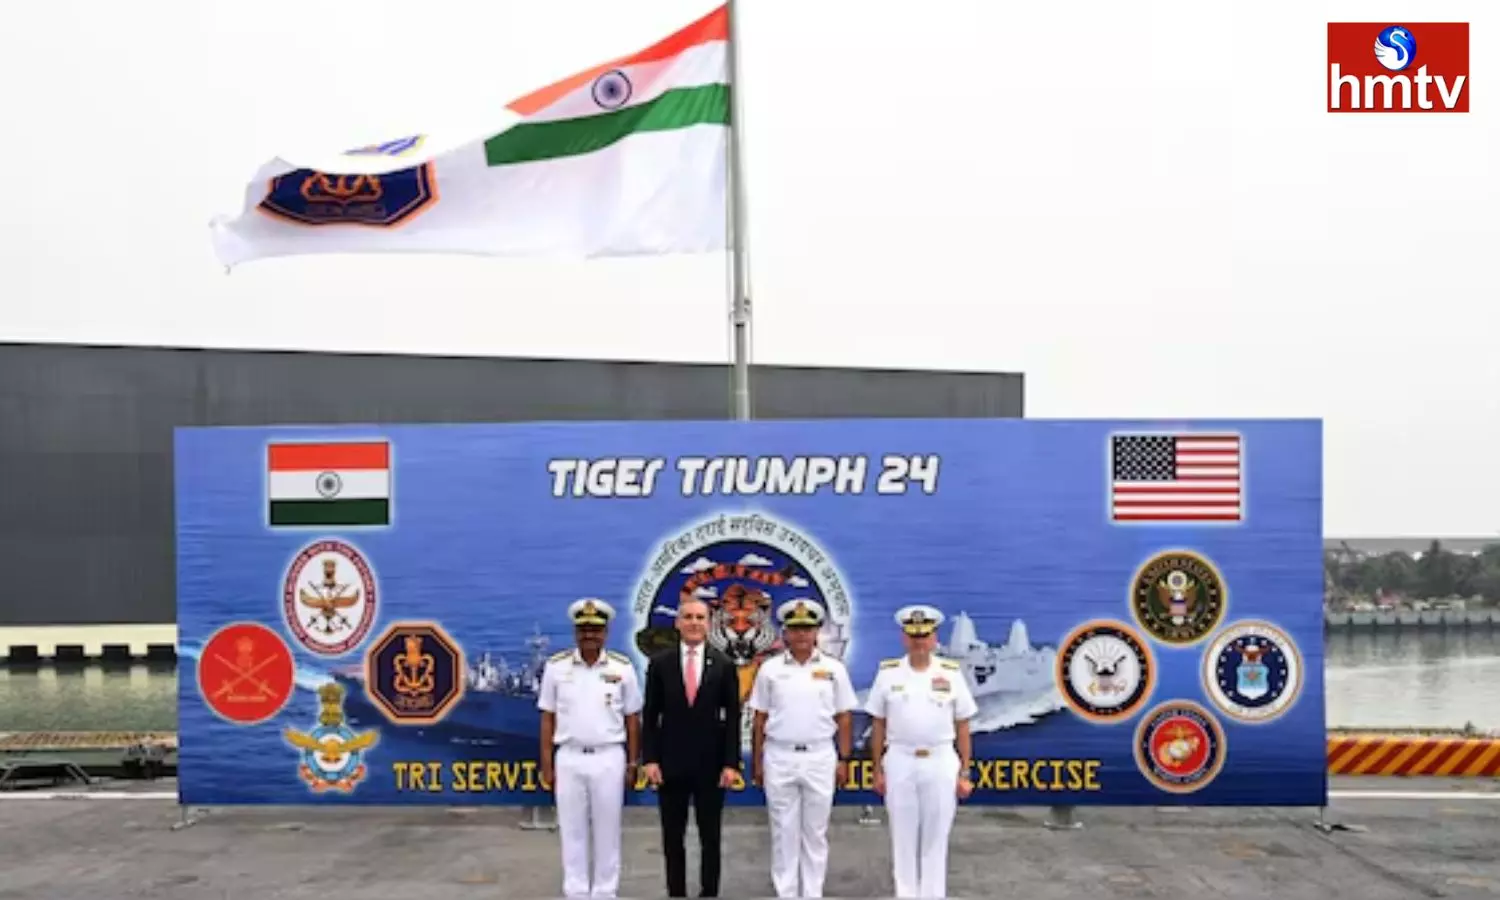 Tiger Triumph - 24 program at Visakhapatnam